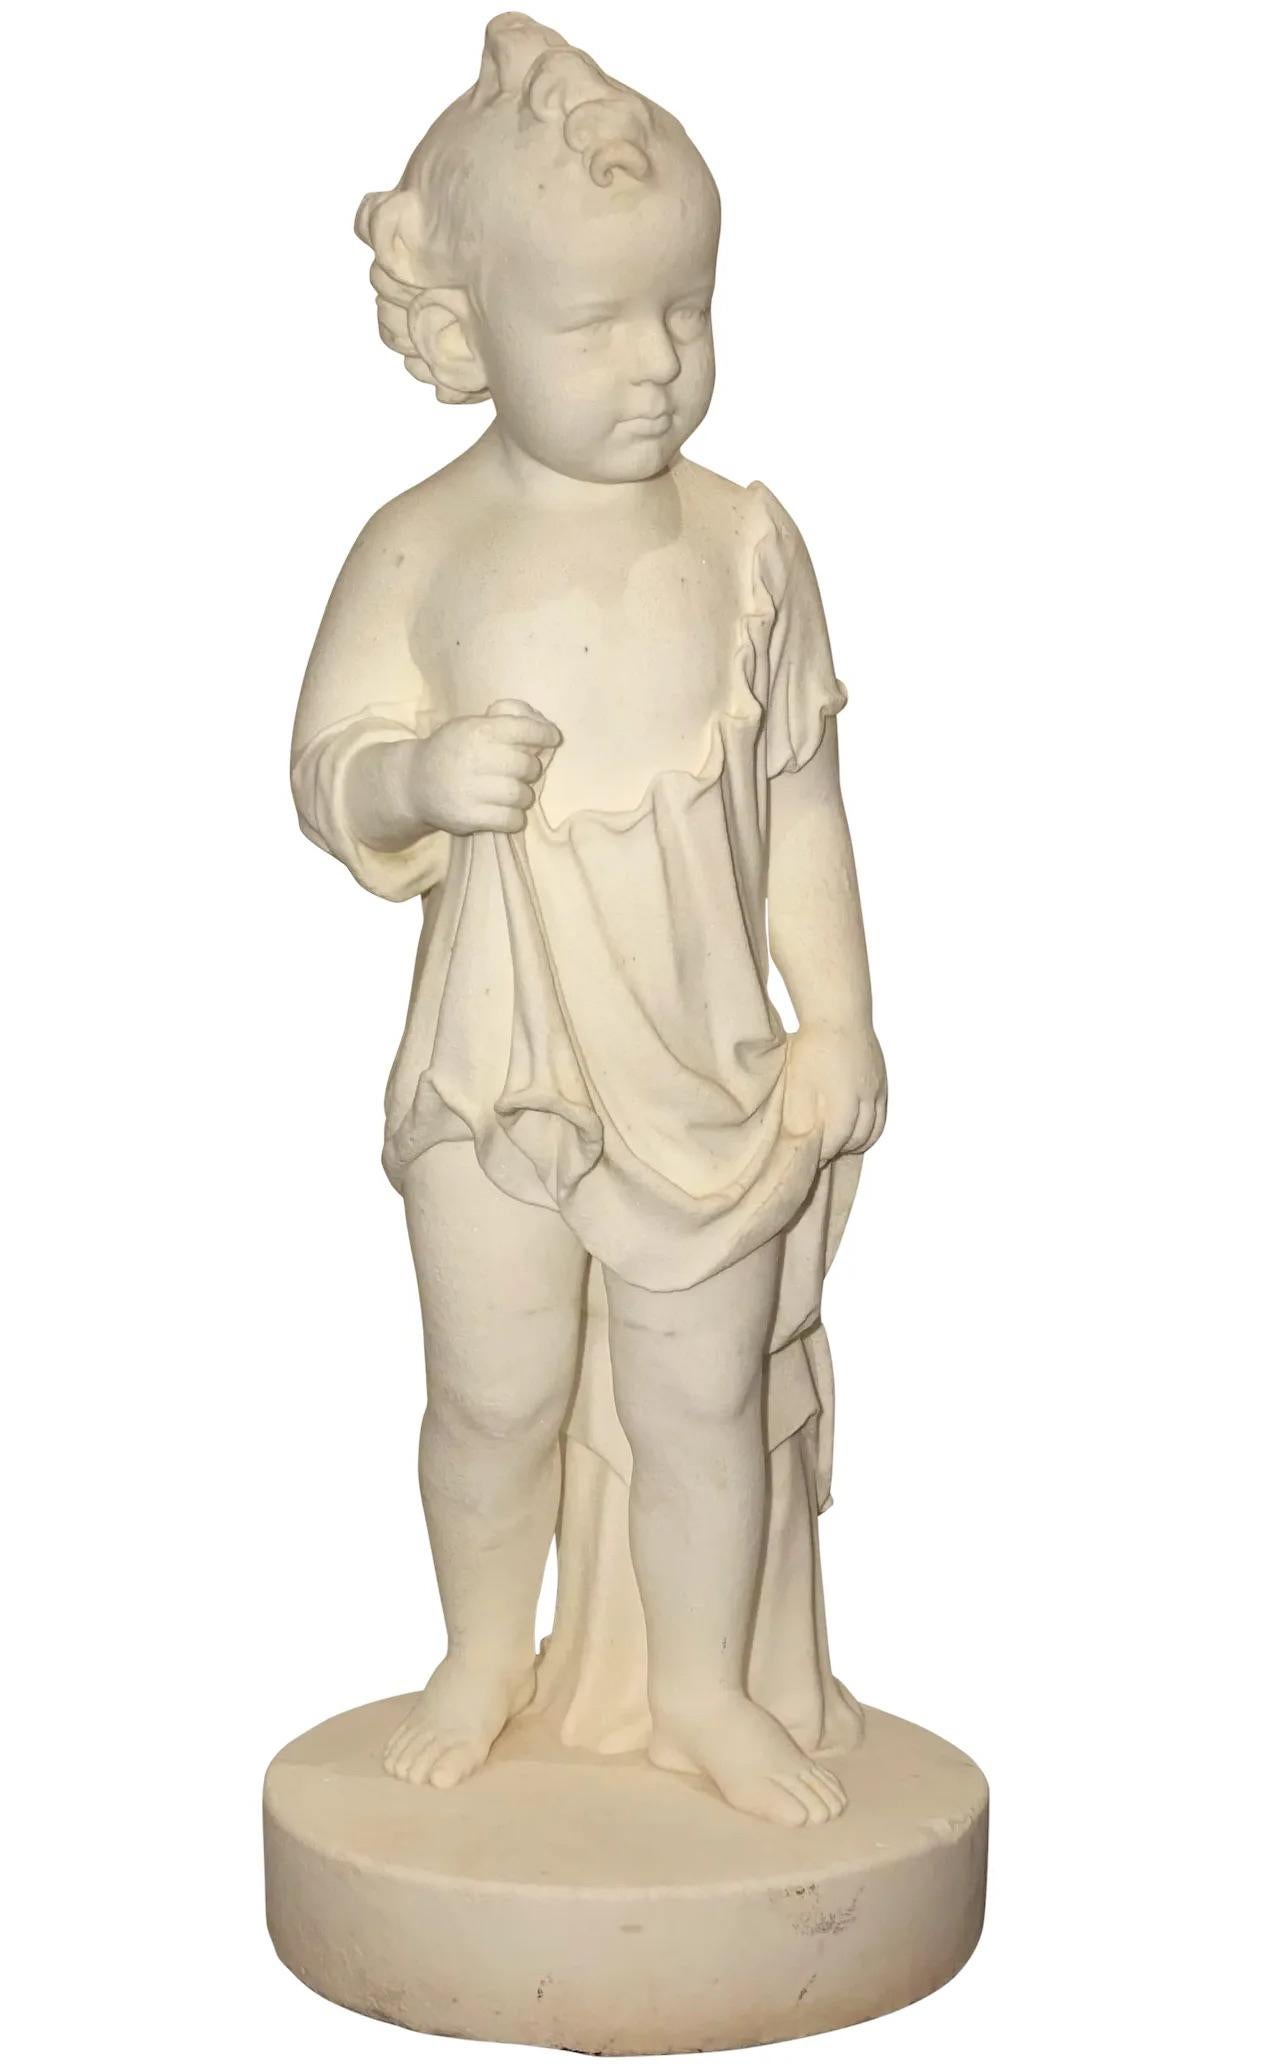 Sculpture d'un jeune garçon avec une robe